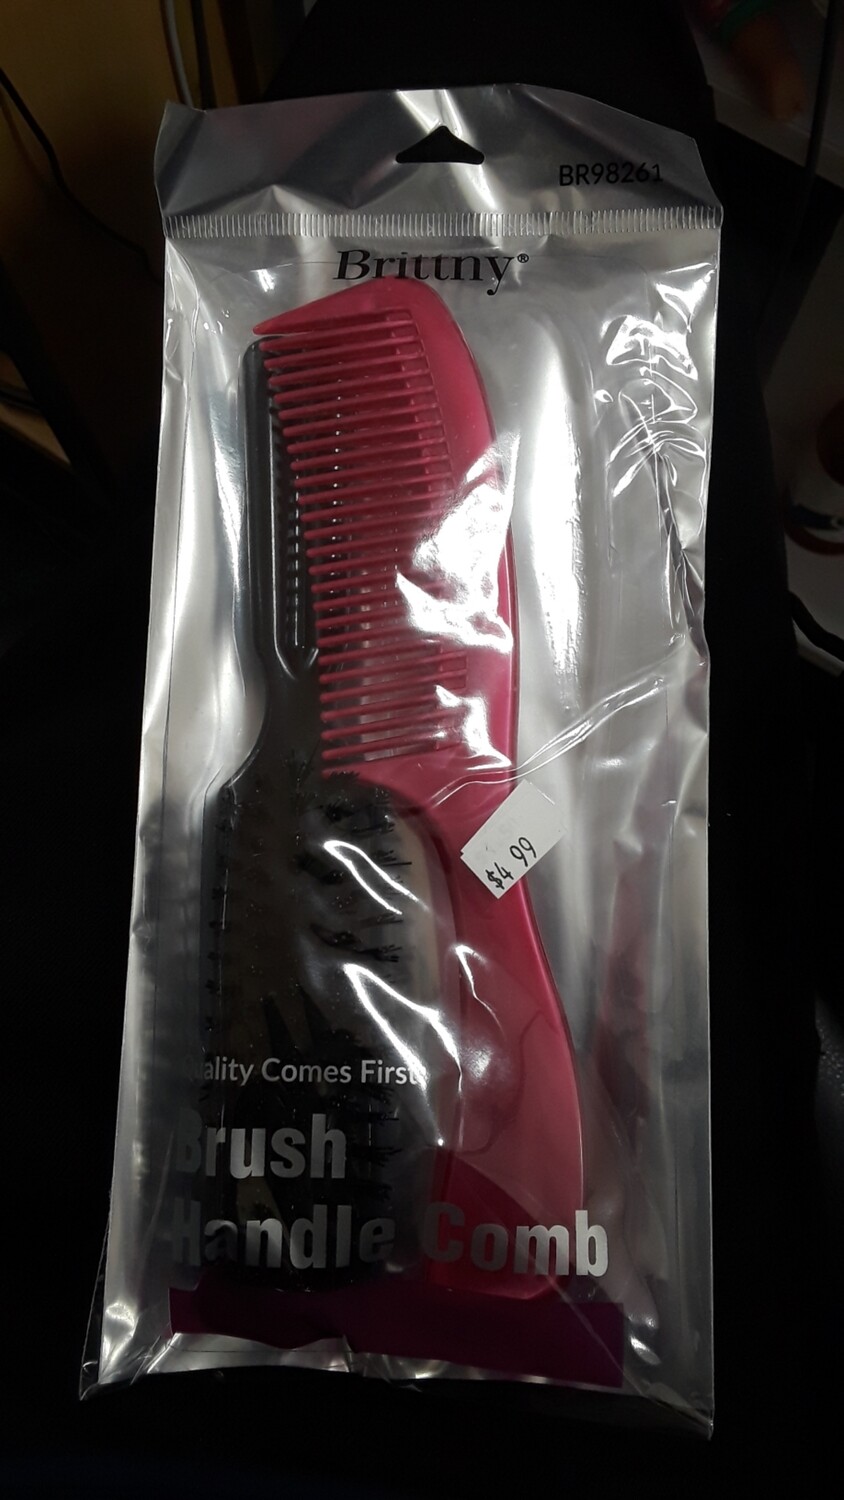 Brittny Brush Handle Comb